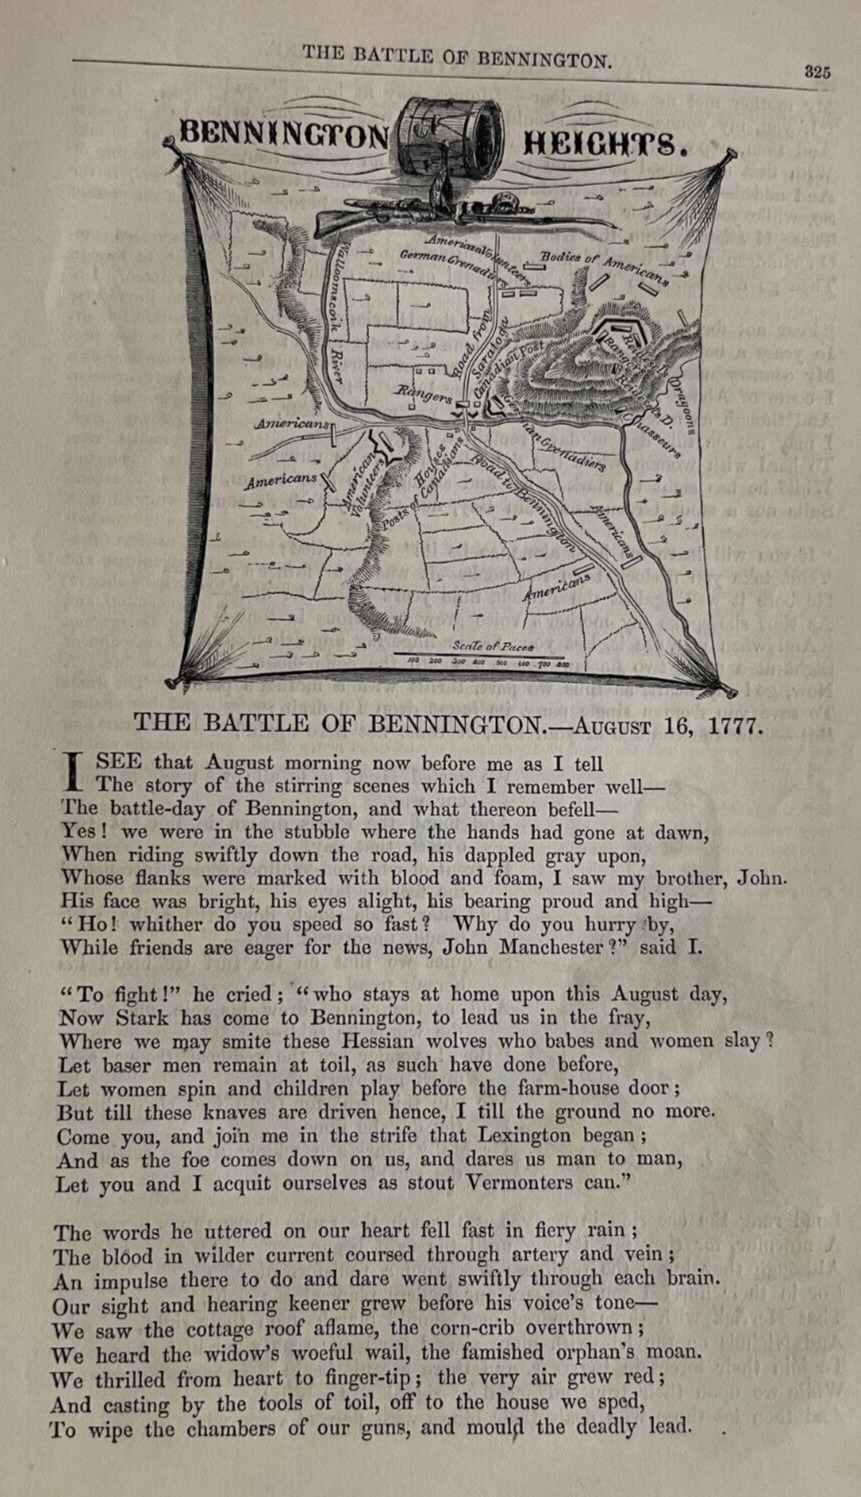 1860 Illustrated Poem The Battle of Bennington